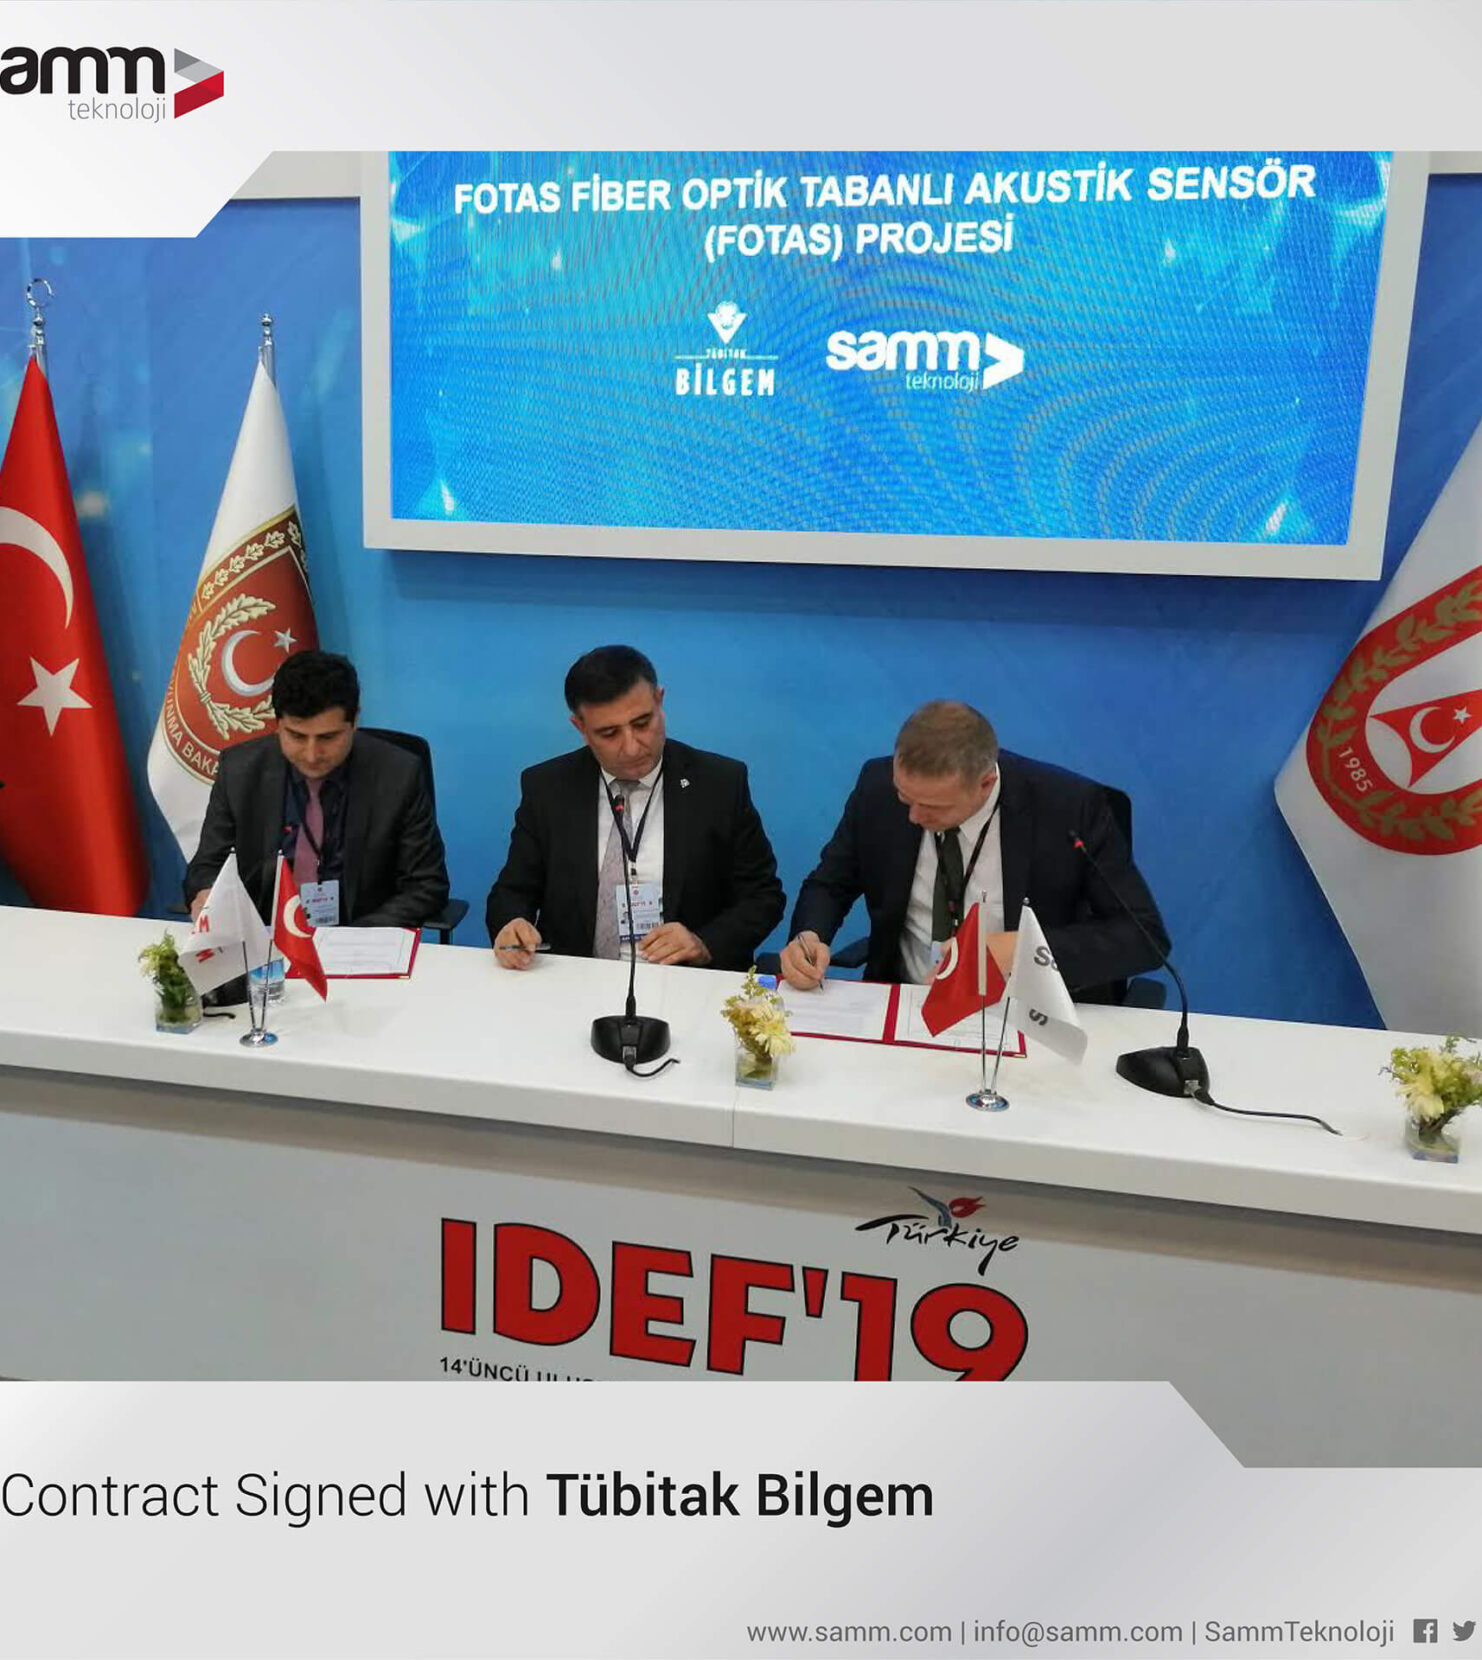 Contract Signed with Tübitak Bilgem